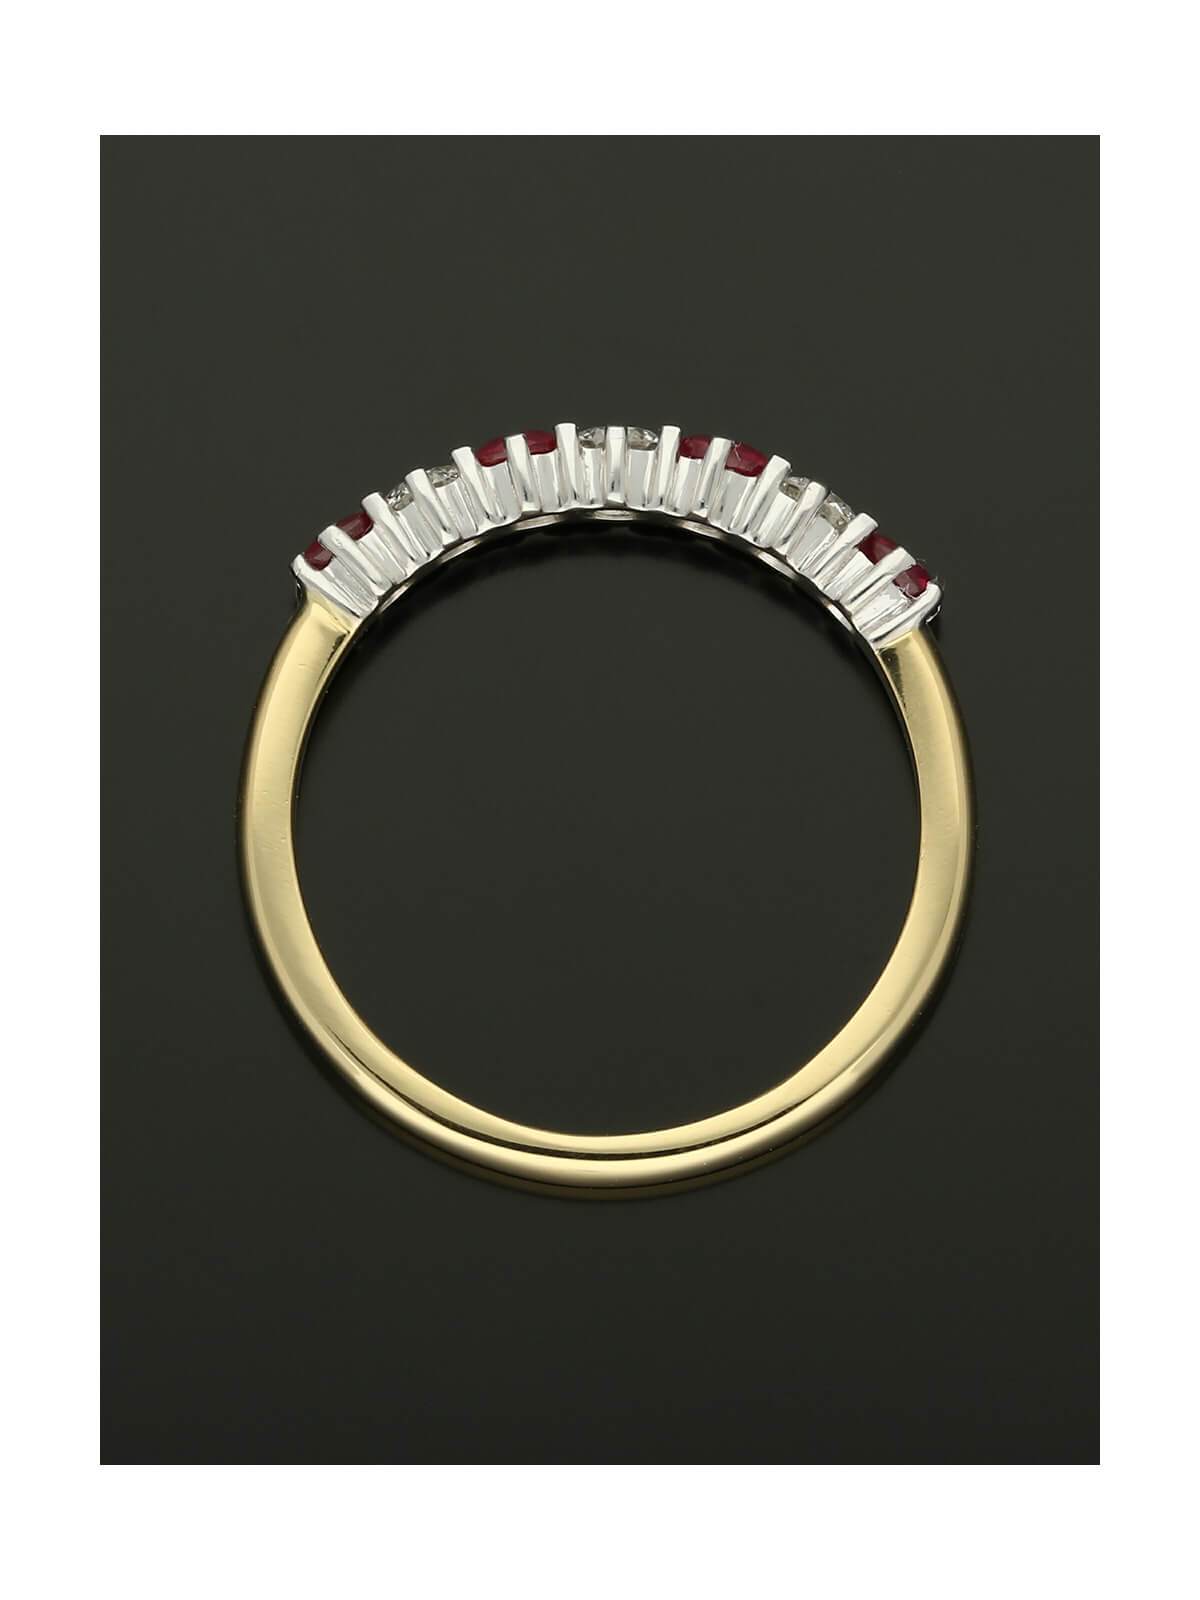 Ruby & Diamond Half Eternity Ring in 18ct Yellow & White Gold